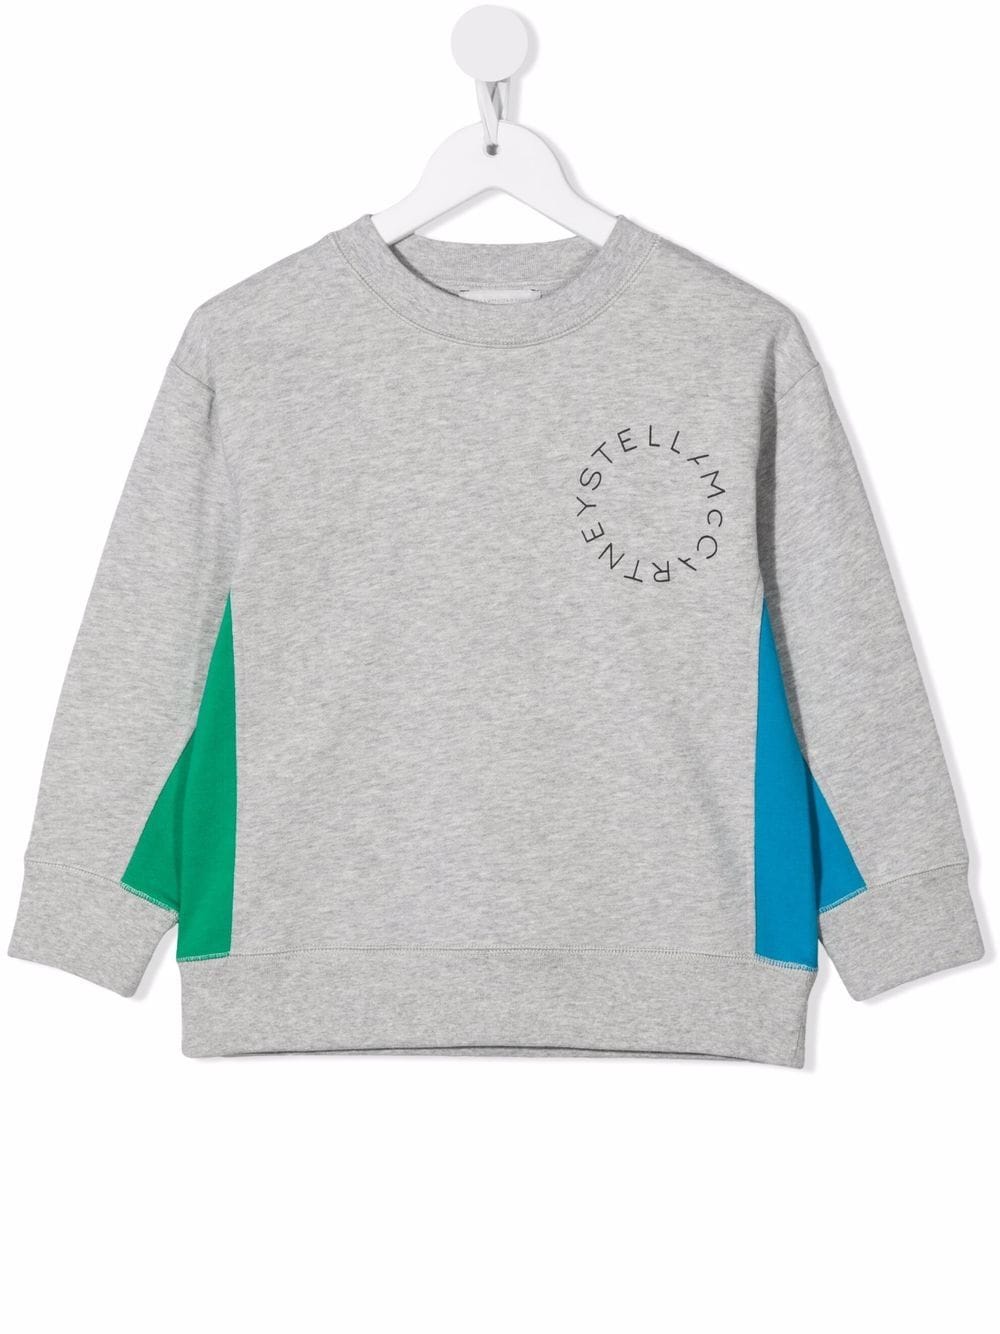 Stella McCartney Kids Grey Kids Sweatshirt With Logo And Contrast Inserts